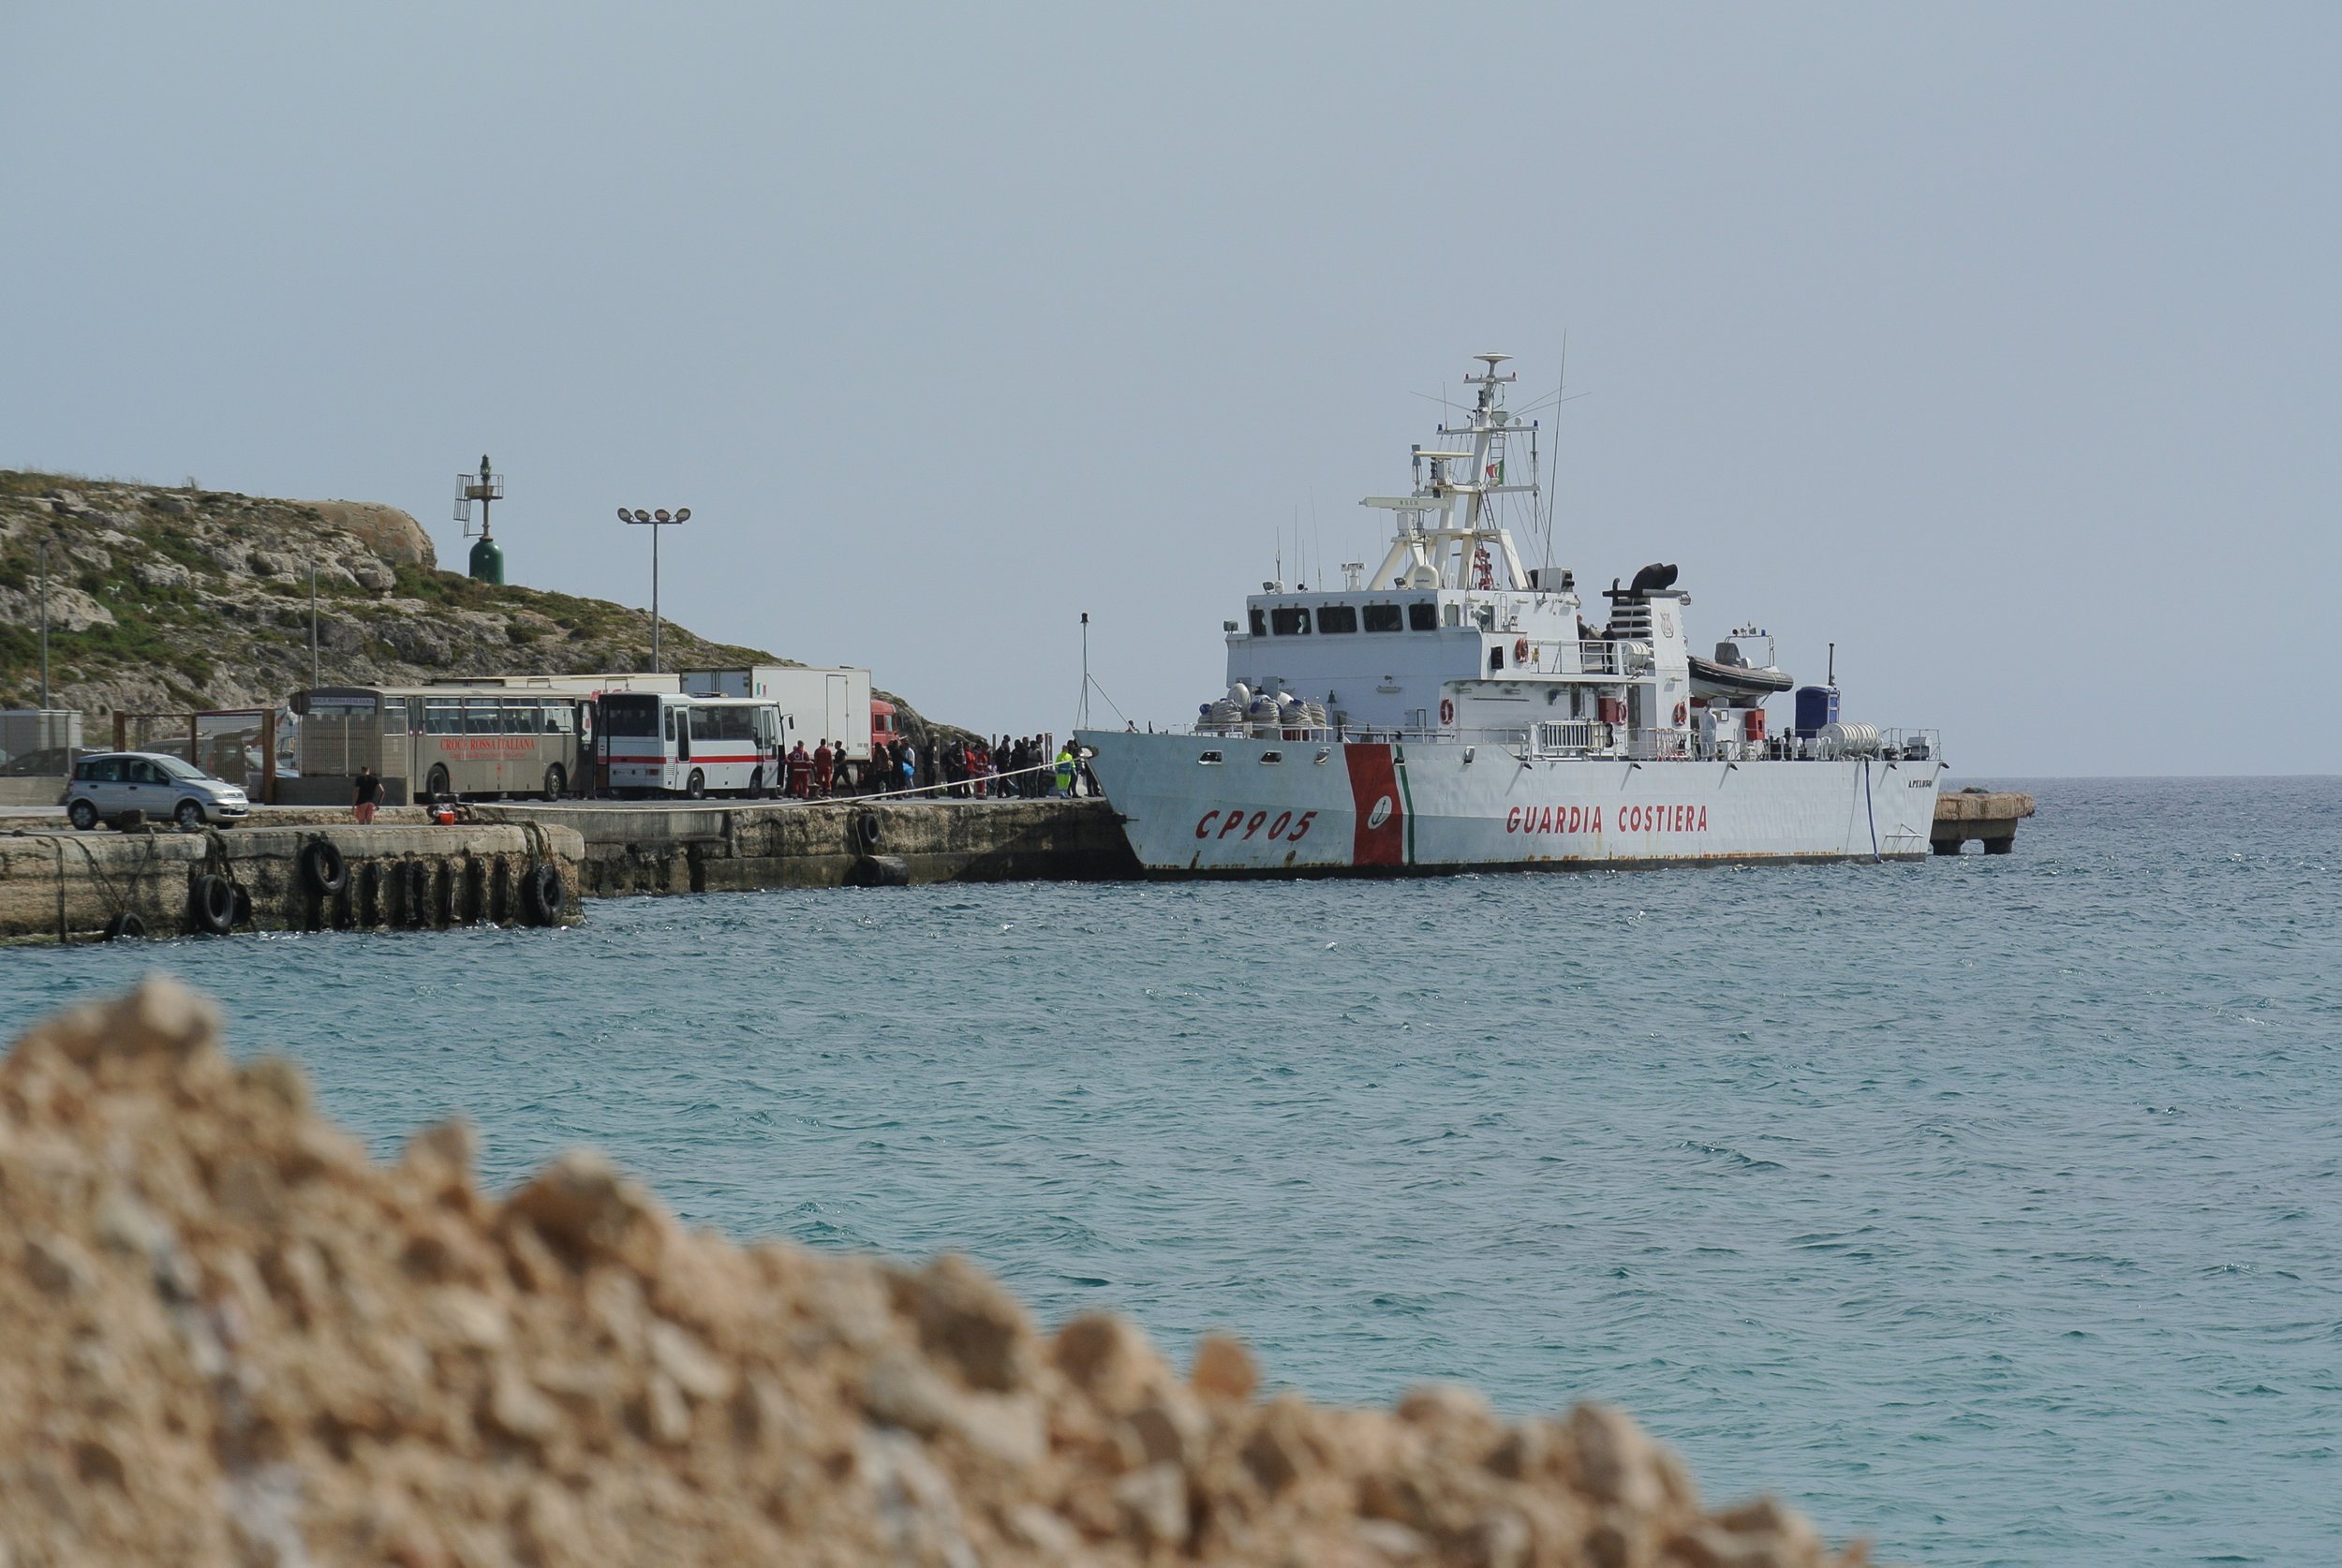 Disembarkation by the Guardia Costiera